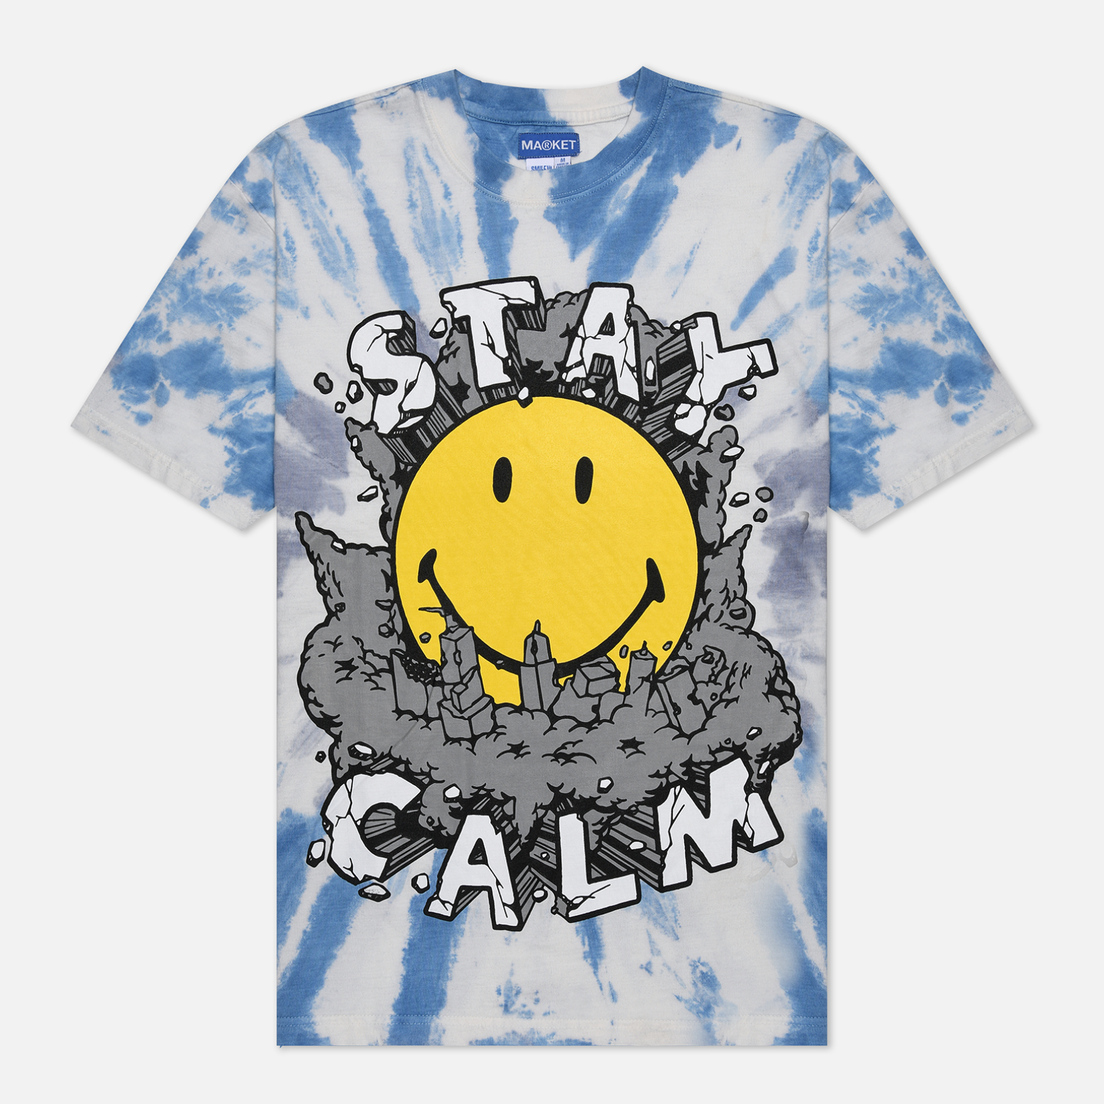 MARKET Мужская футболка Smiley Stay Calm